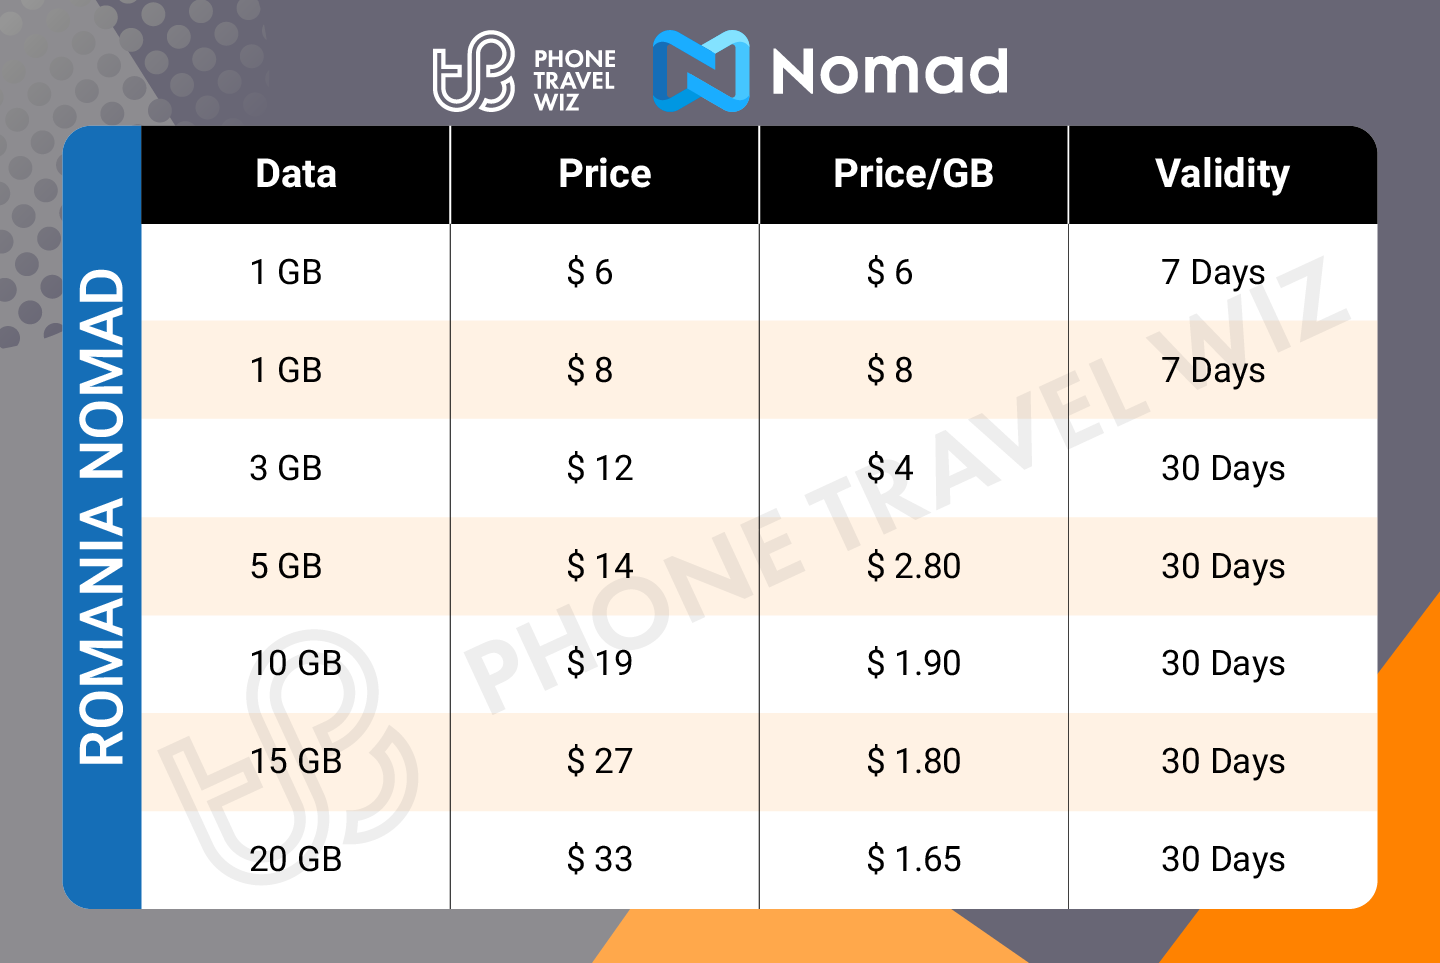 Nomad Romania eSIM Price & Data Details Infographic by Phone Travel Wiz